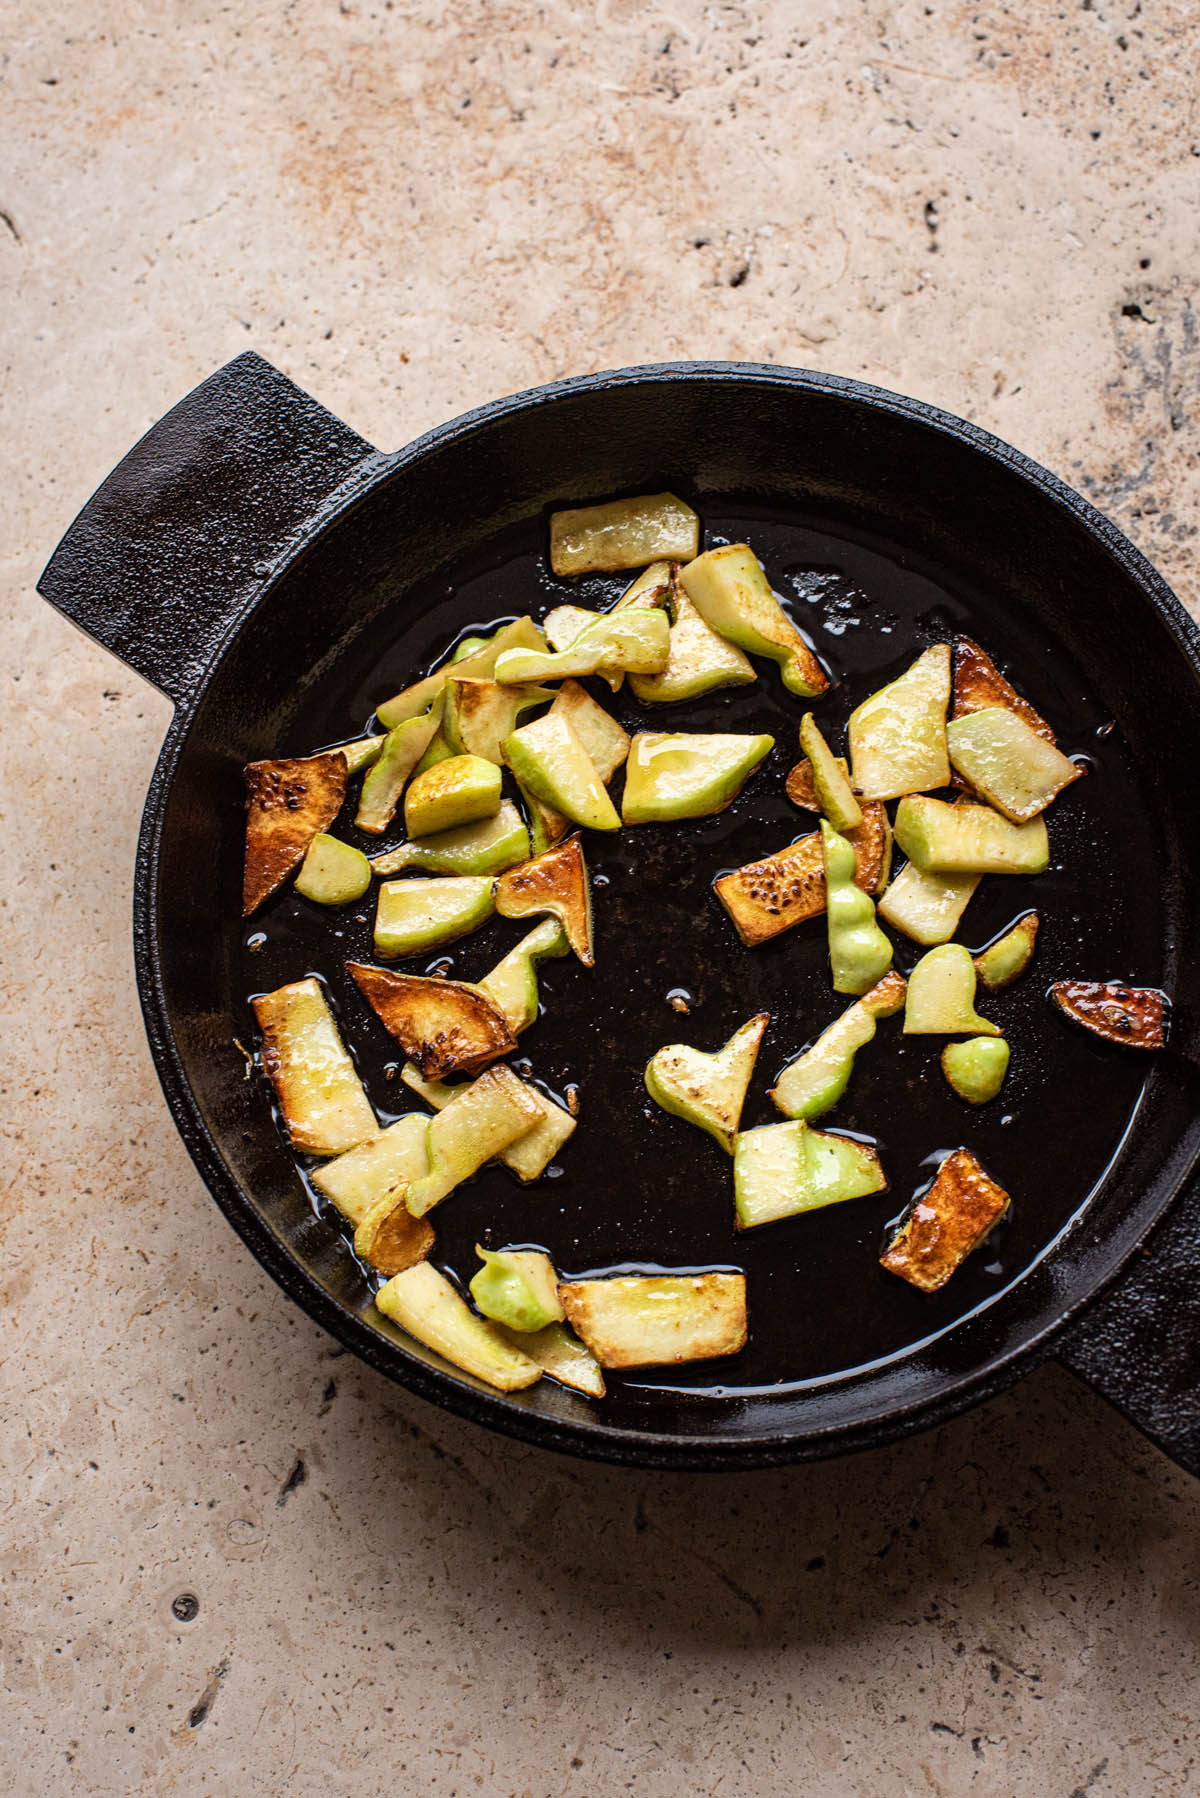 Fried zucchini in a cast iron pan.